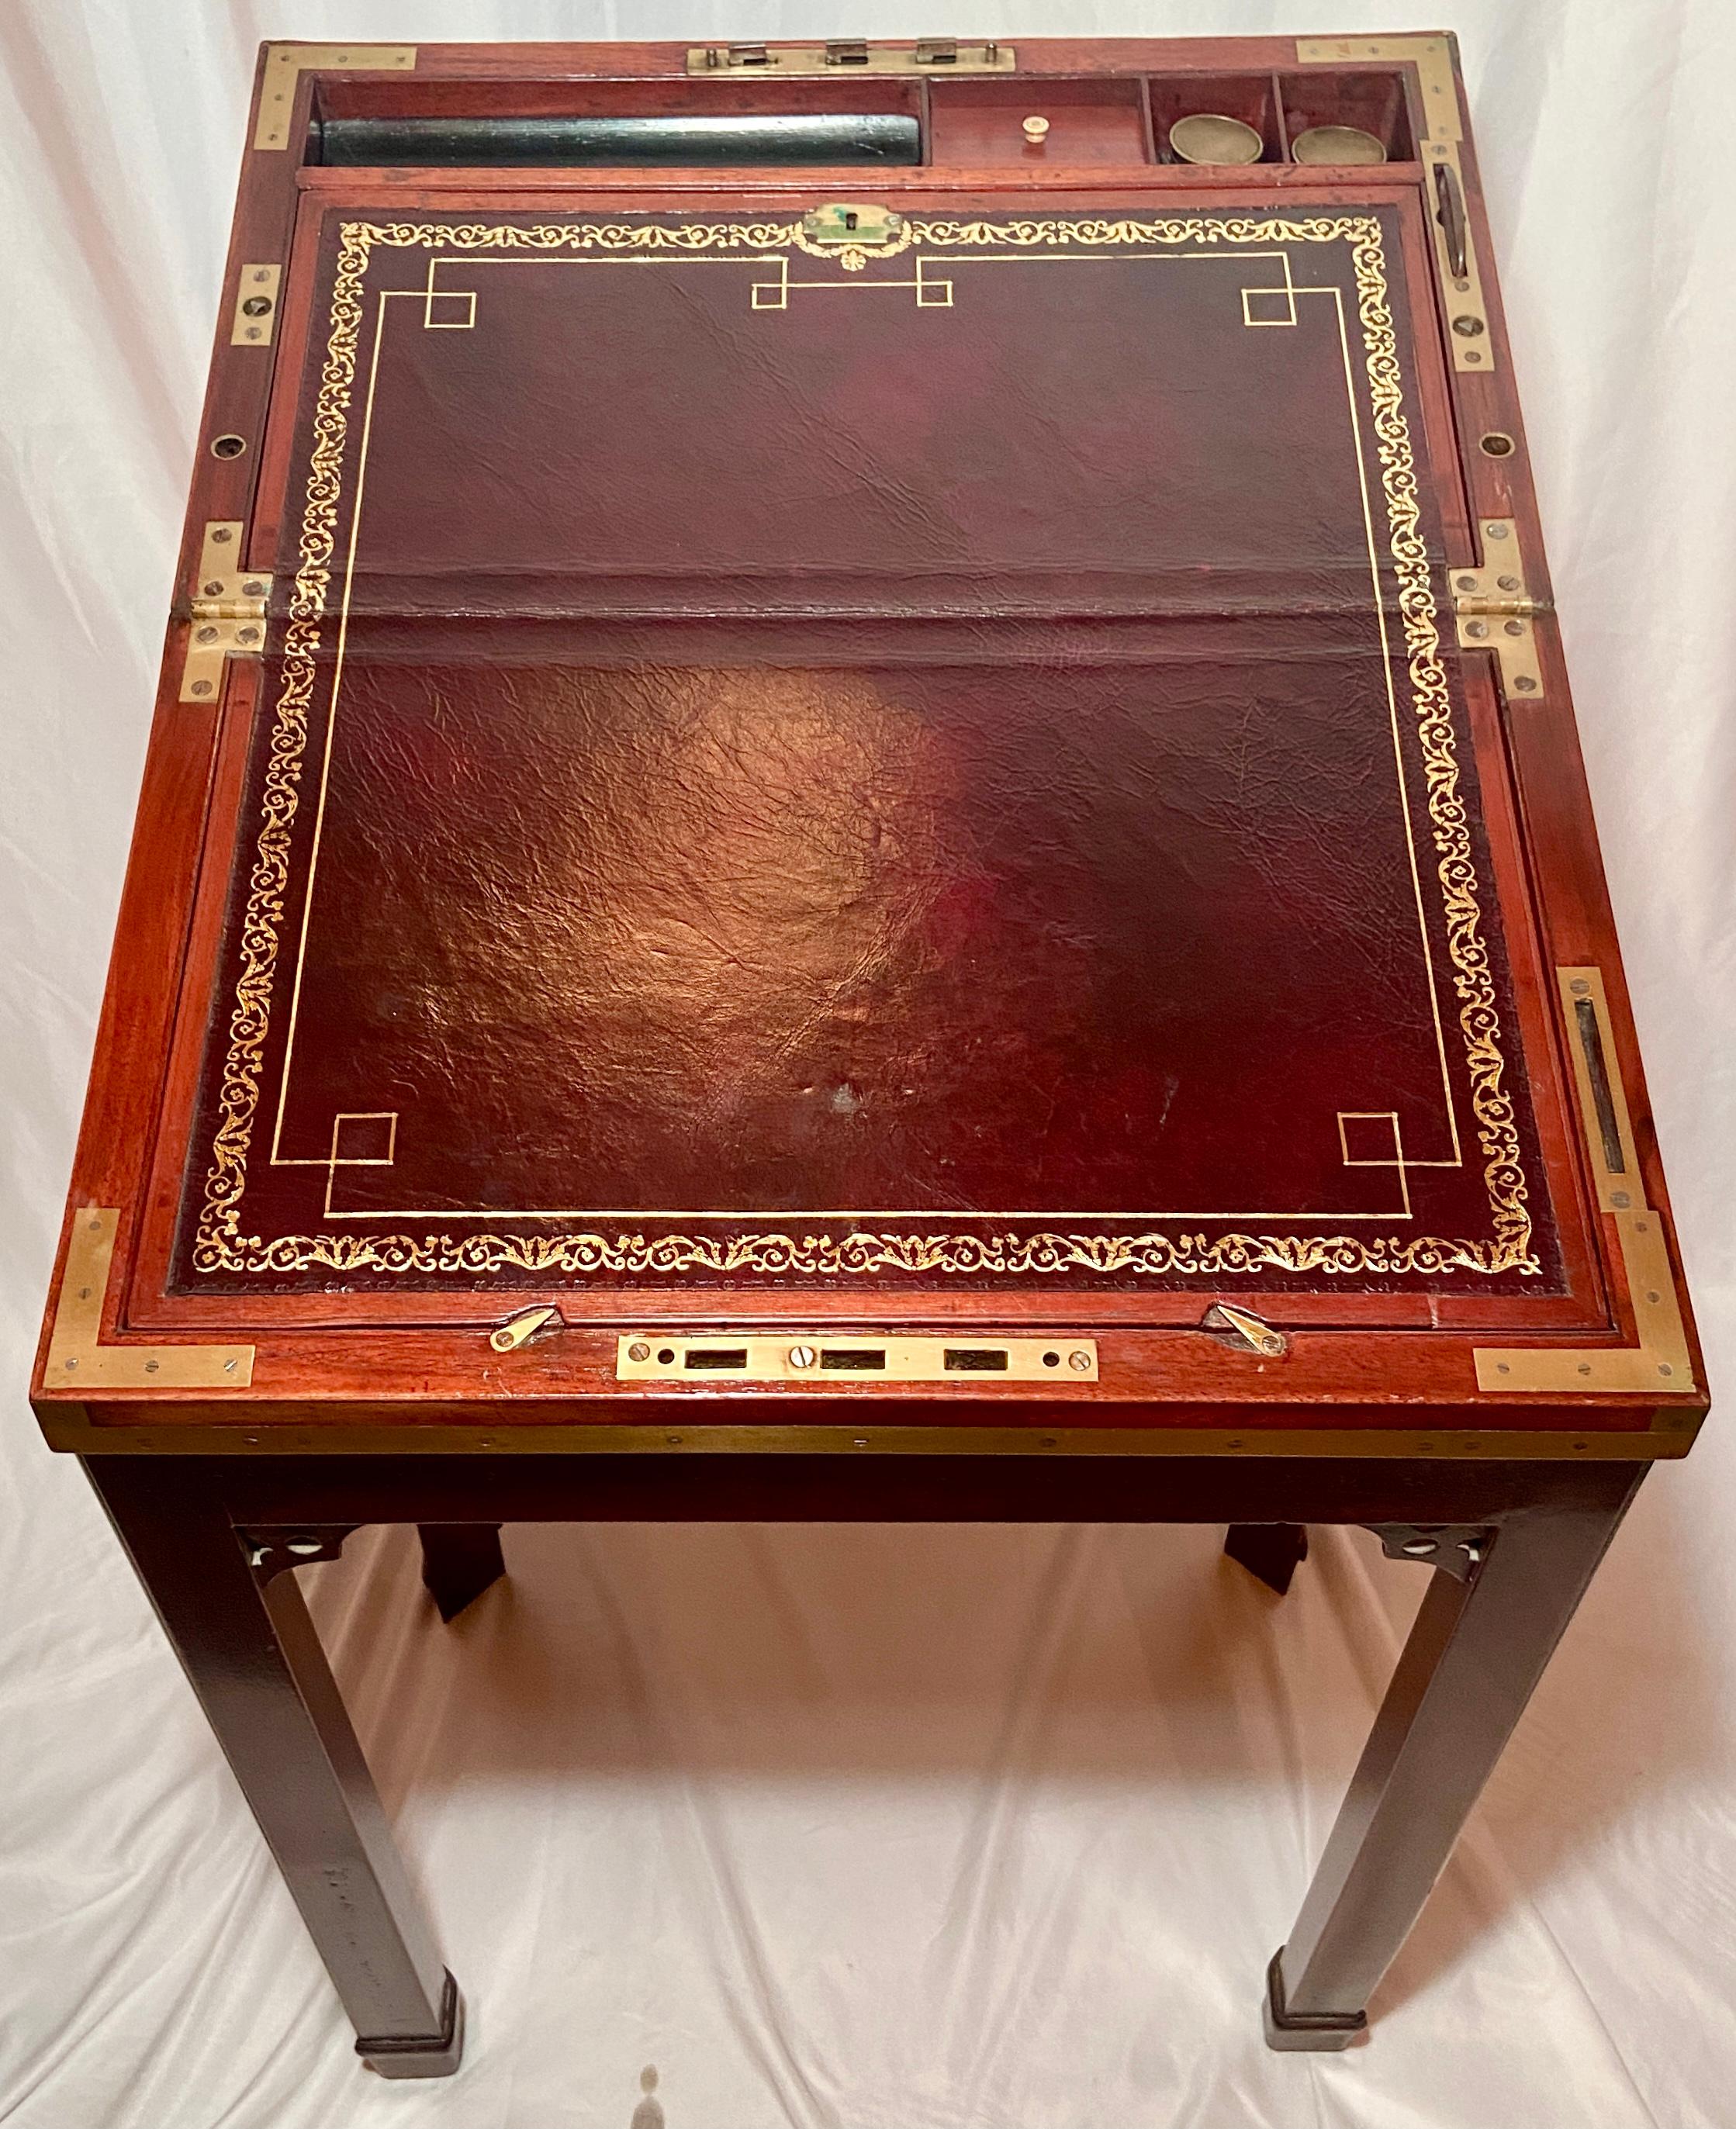 Rare Antique English Mahogany Brass Bound Travel Box, circa 1800 In Good Condition For Sale In New Orleans, LA